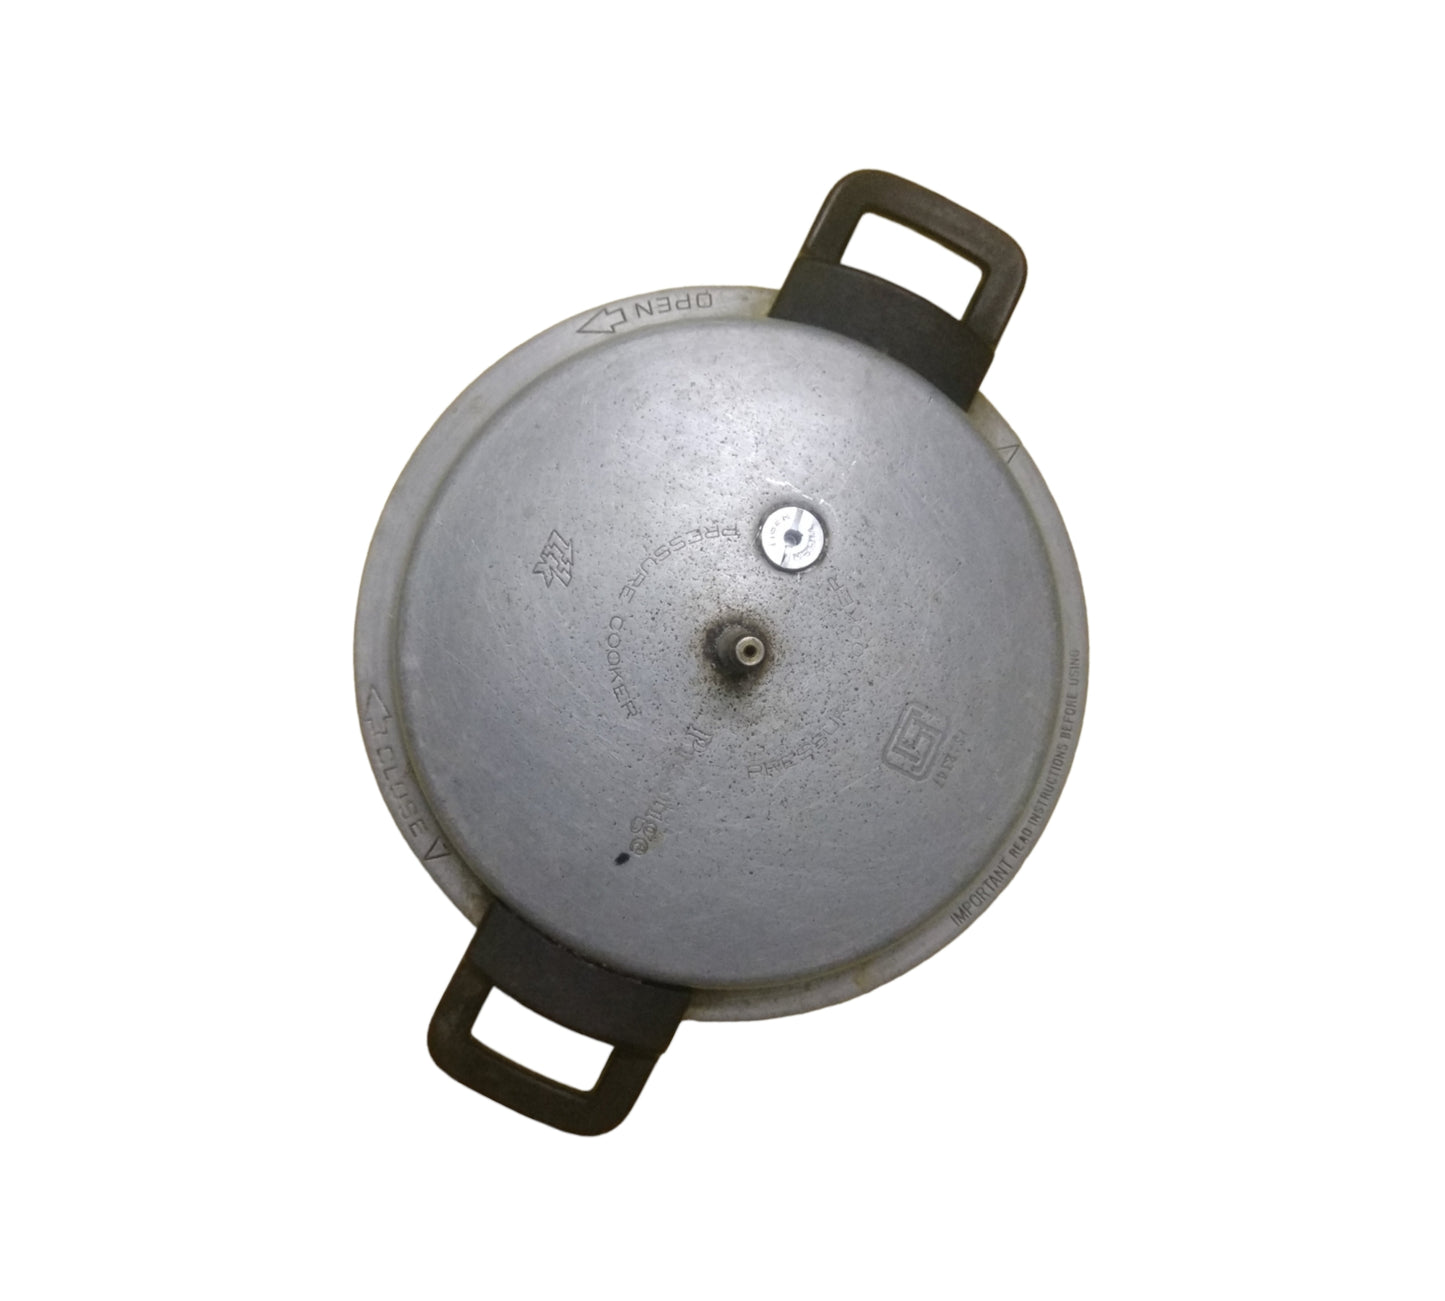 Cooker gasket suitable for Popular 5 Litre Pressure Cooker - Faritha